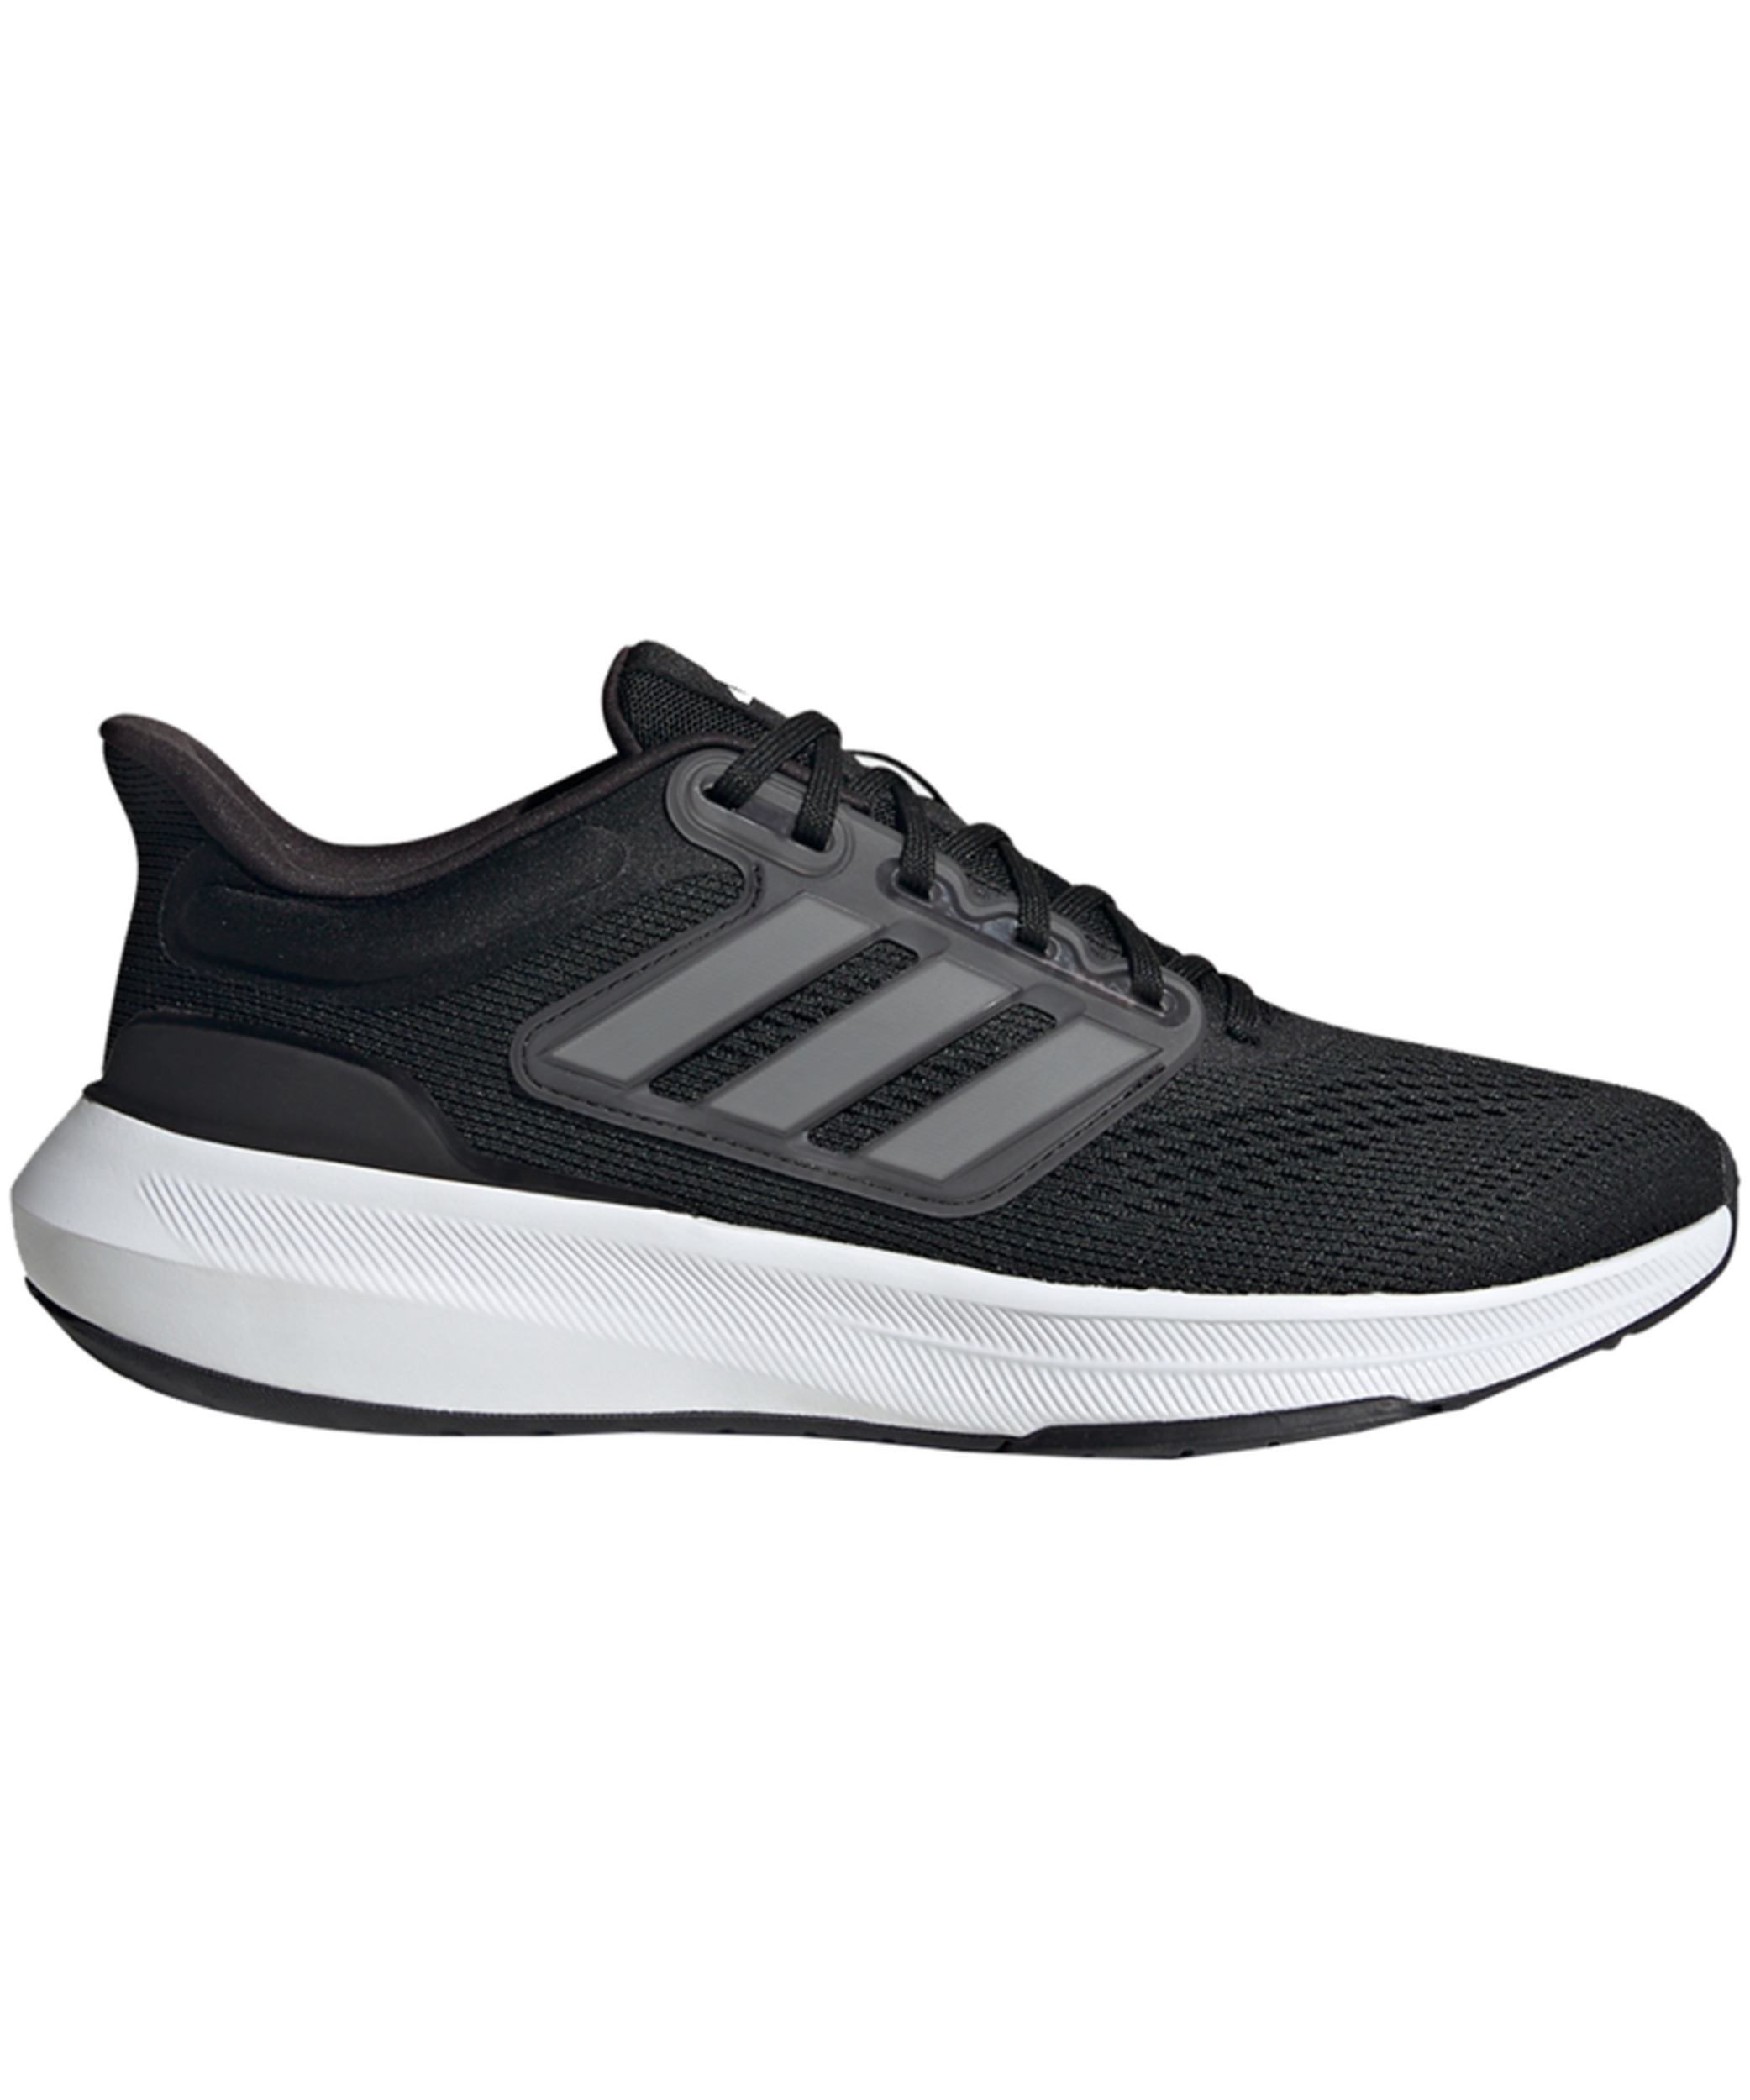 adidas Men's Ultrabounce Running Shoes - Black/White | Marks